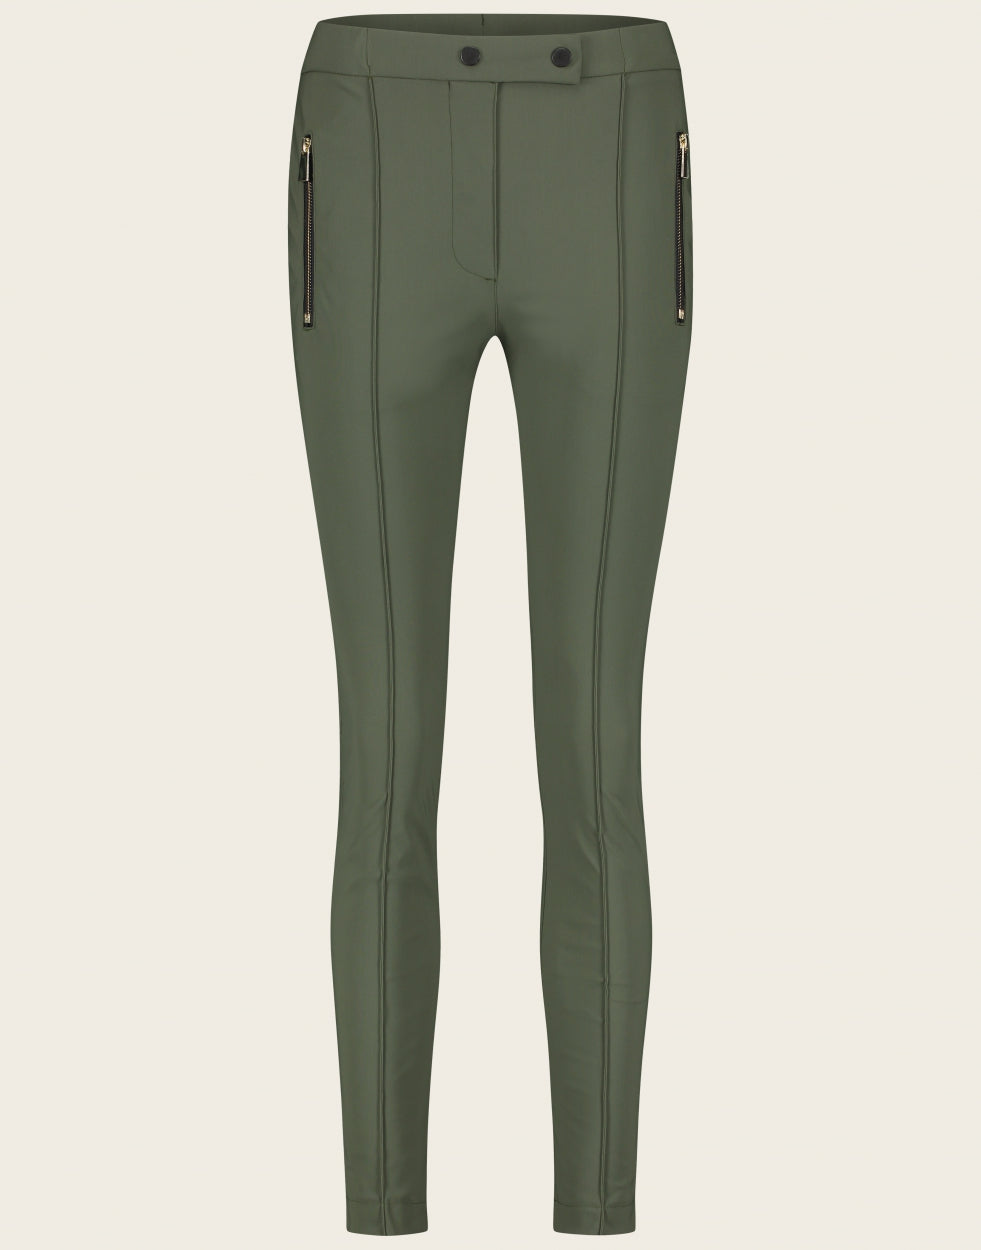 Pants Kaya Long/1 | Army